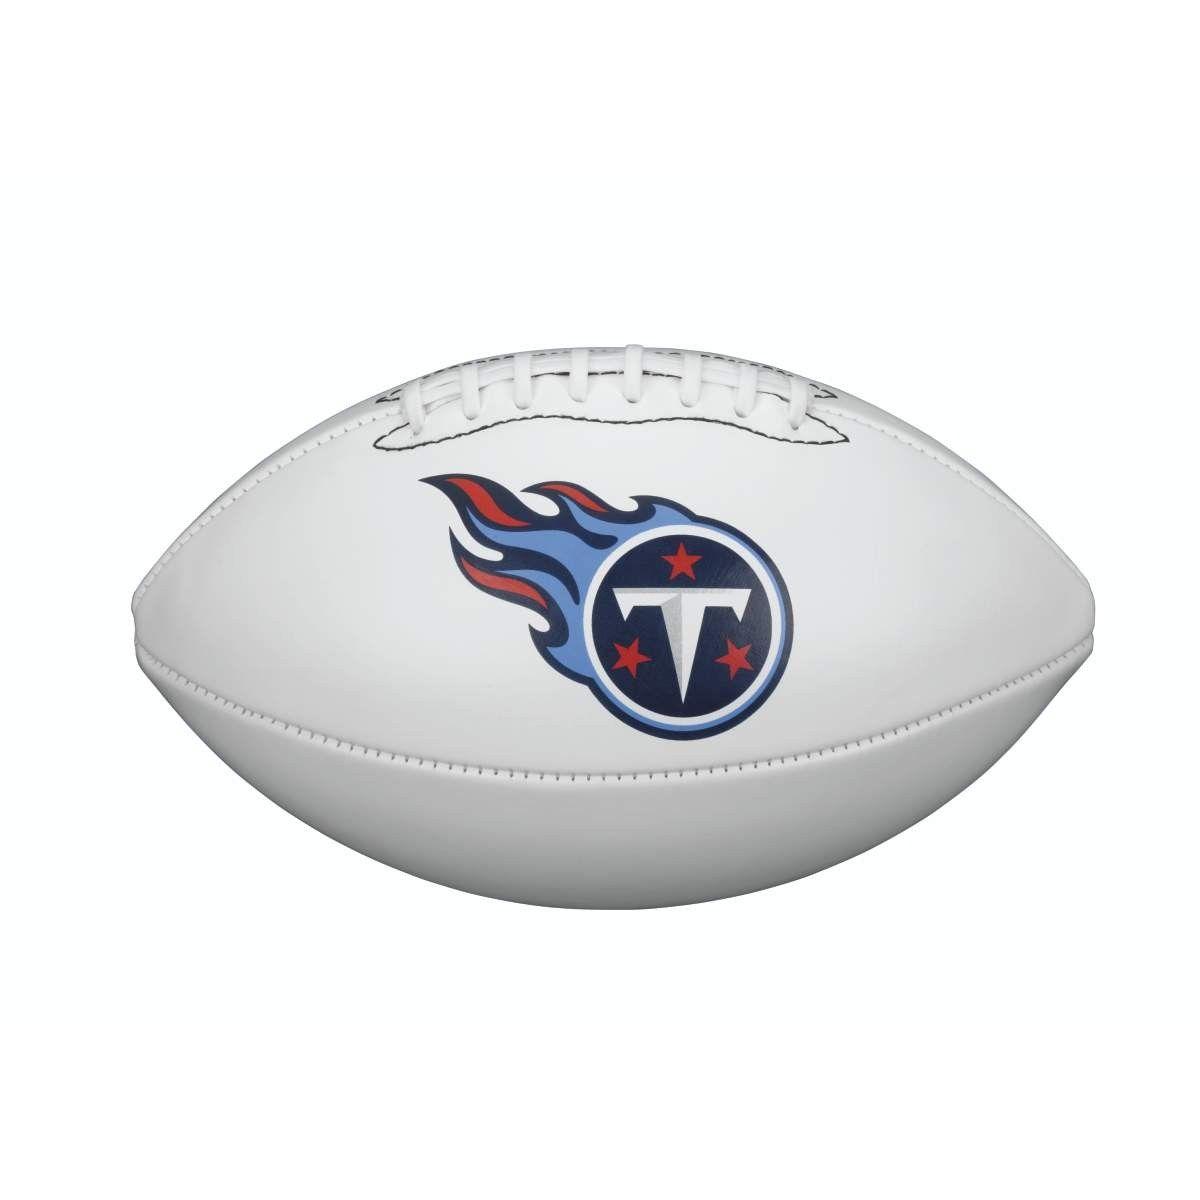 Titans Football Logo - NFL TEAM LOGO AUTOGRAPH FOOTBALL - OFFICIAL, TENNESSEE TITANS ...